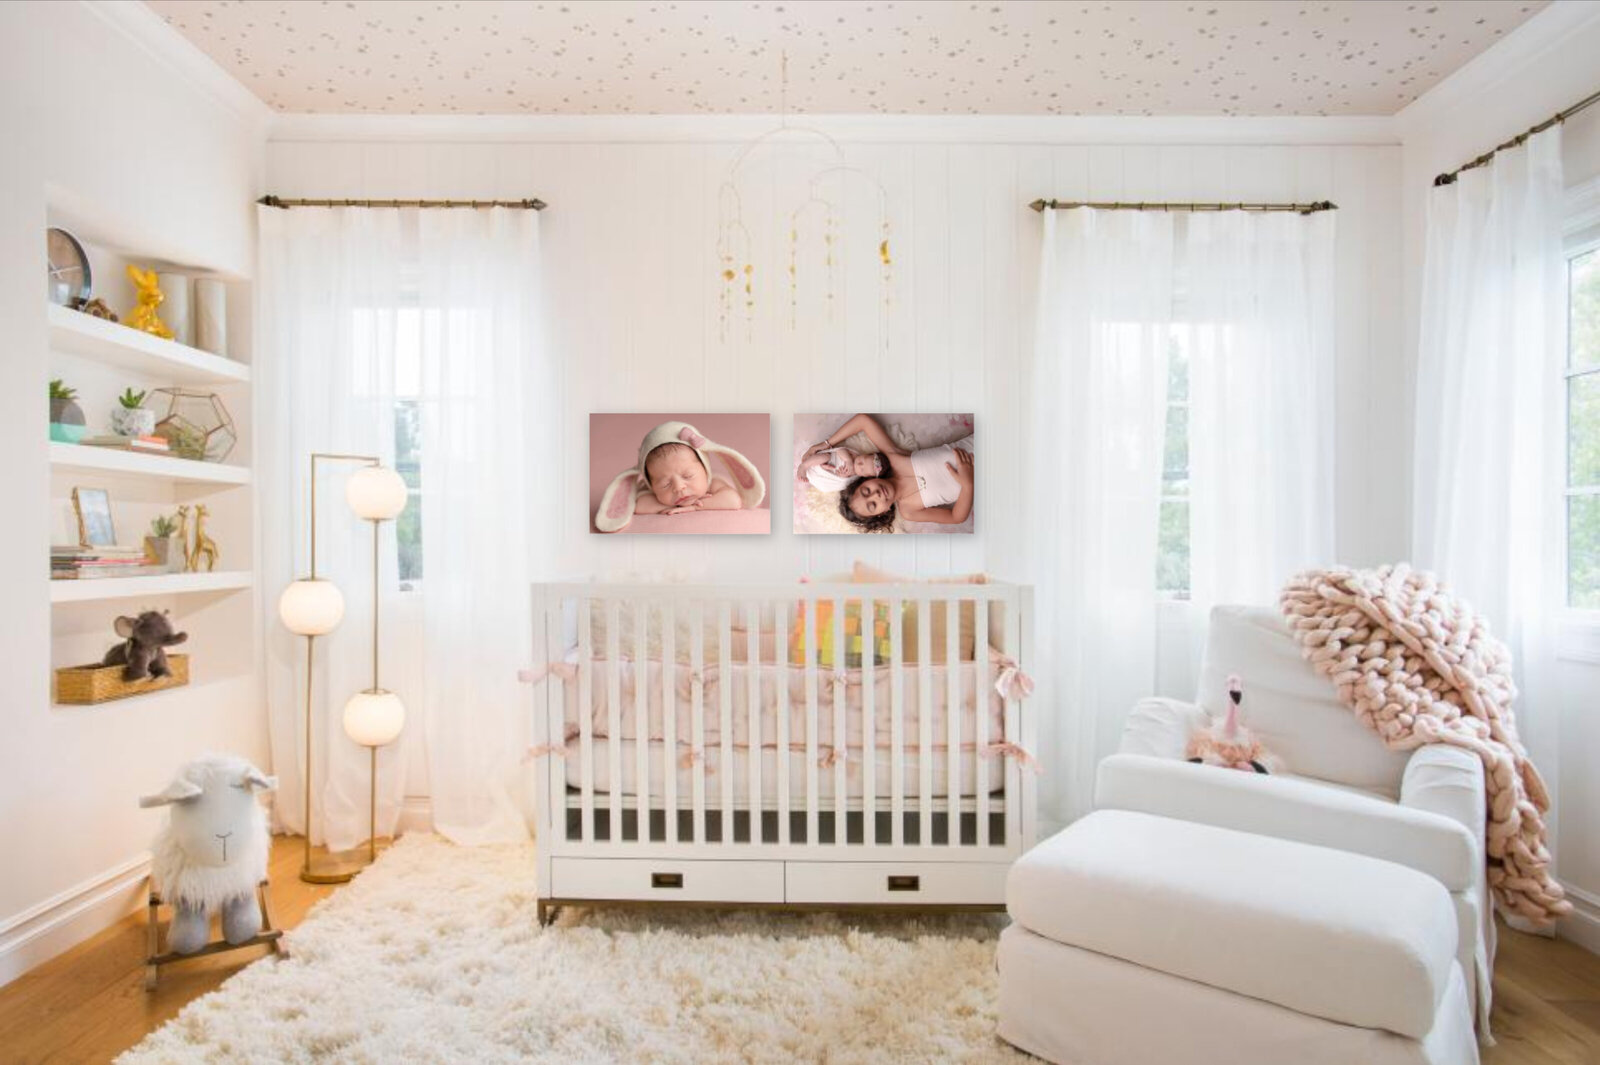 Newborn wall art hanging over a baby's crib